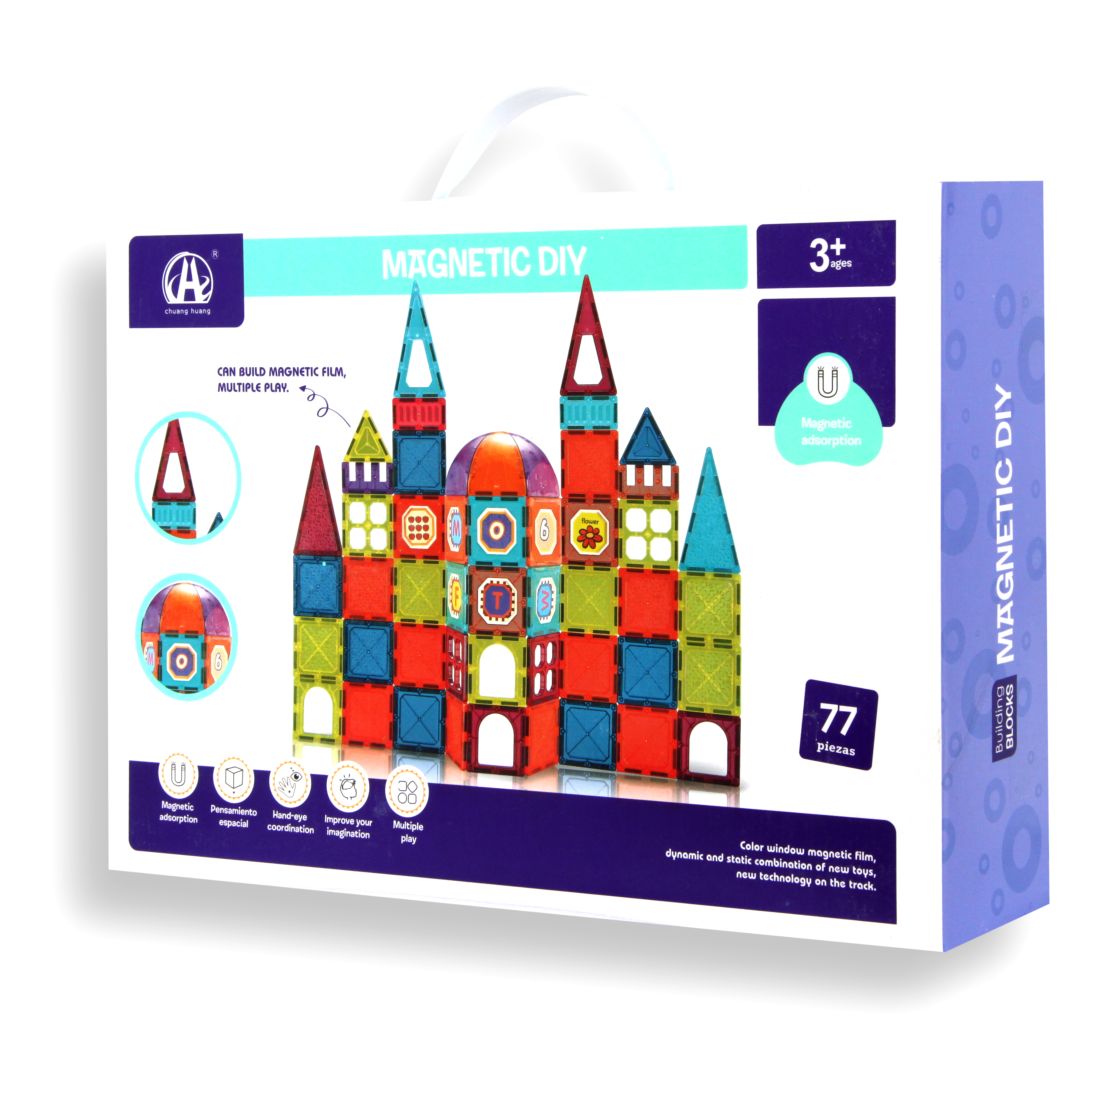 Toys Station Magnetic Blocks Diy Set (77 Pieces)